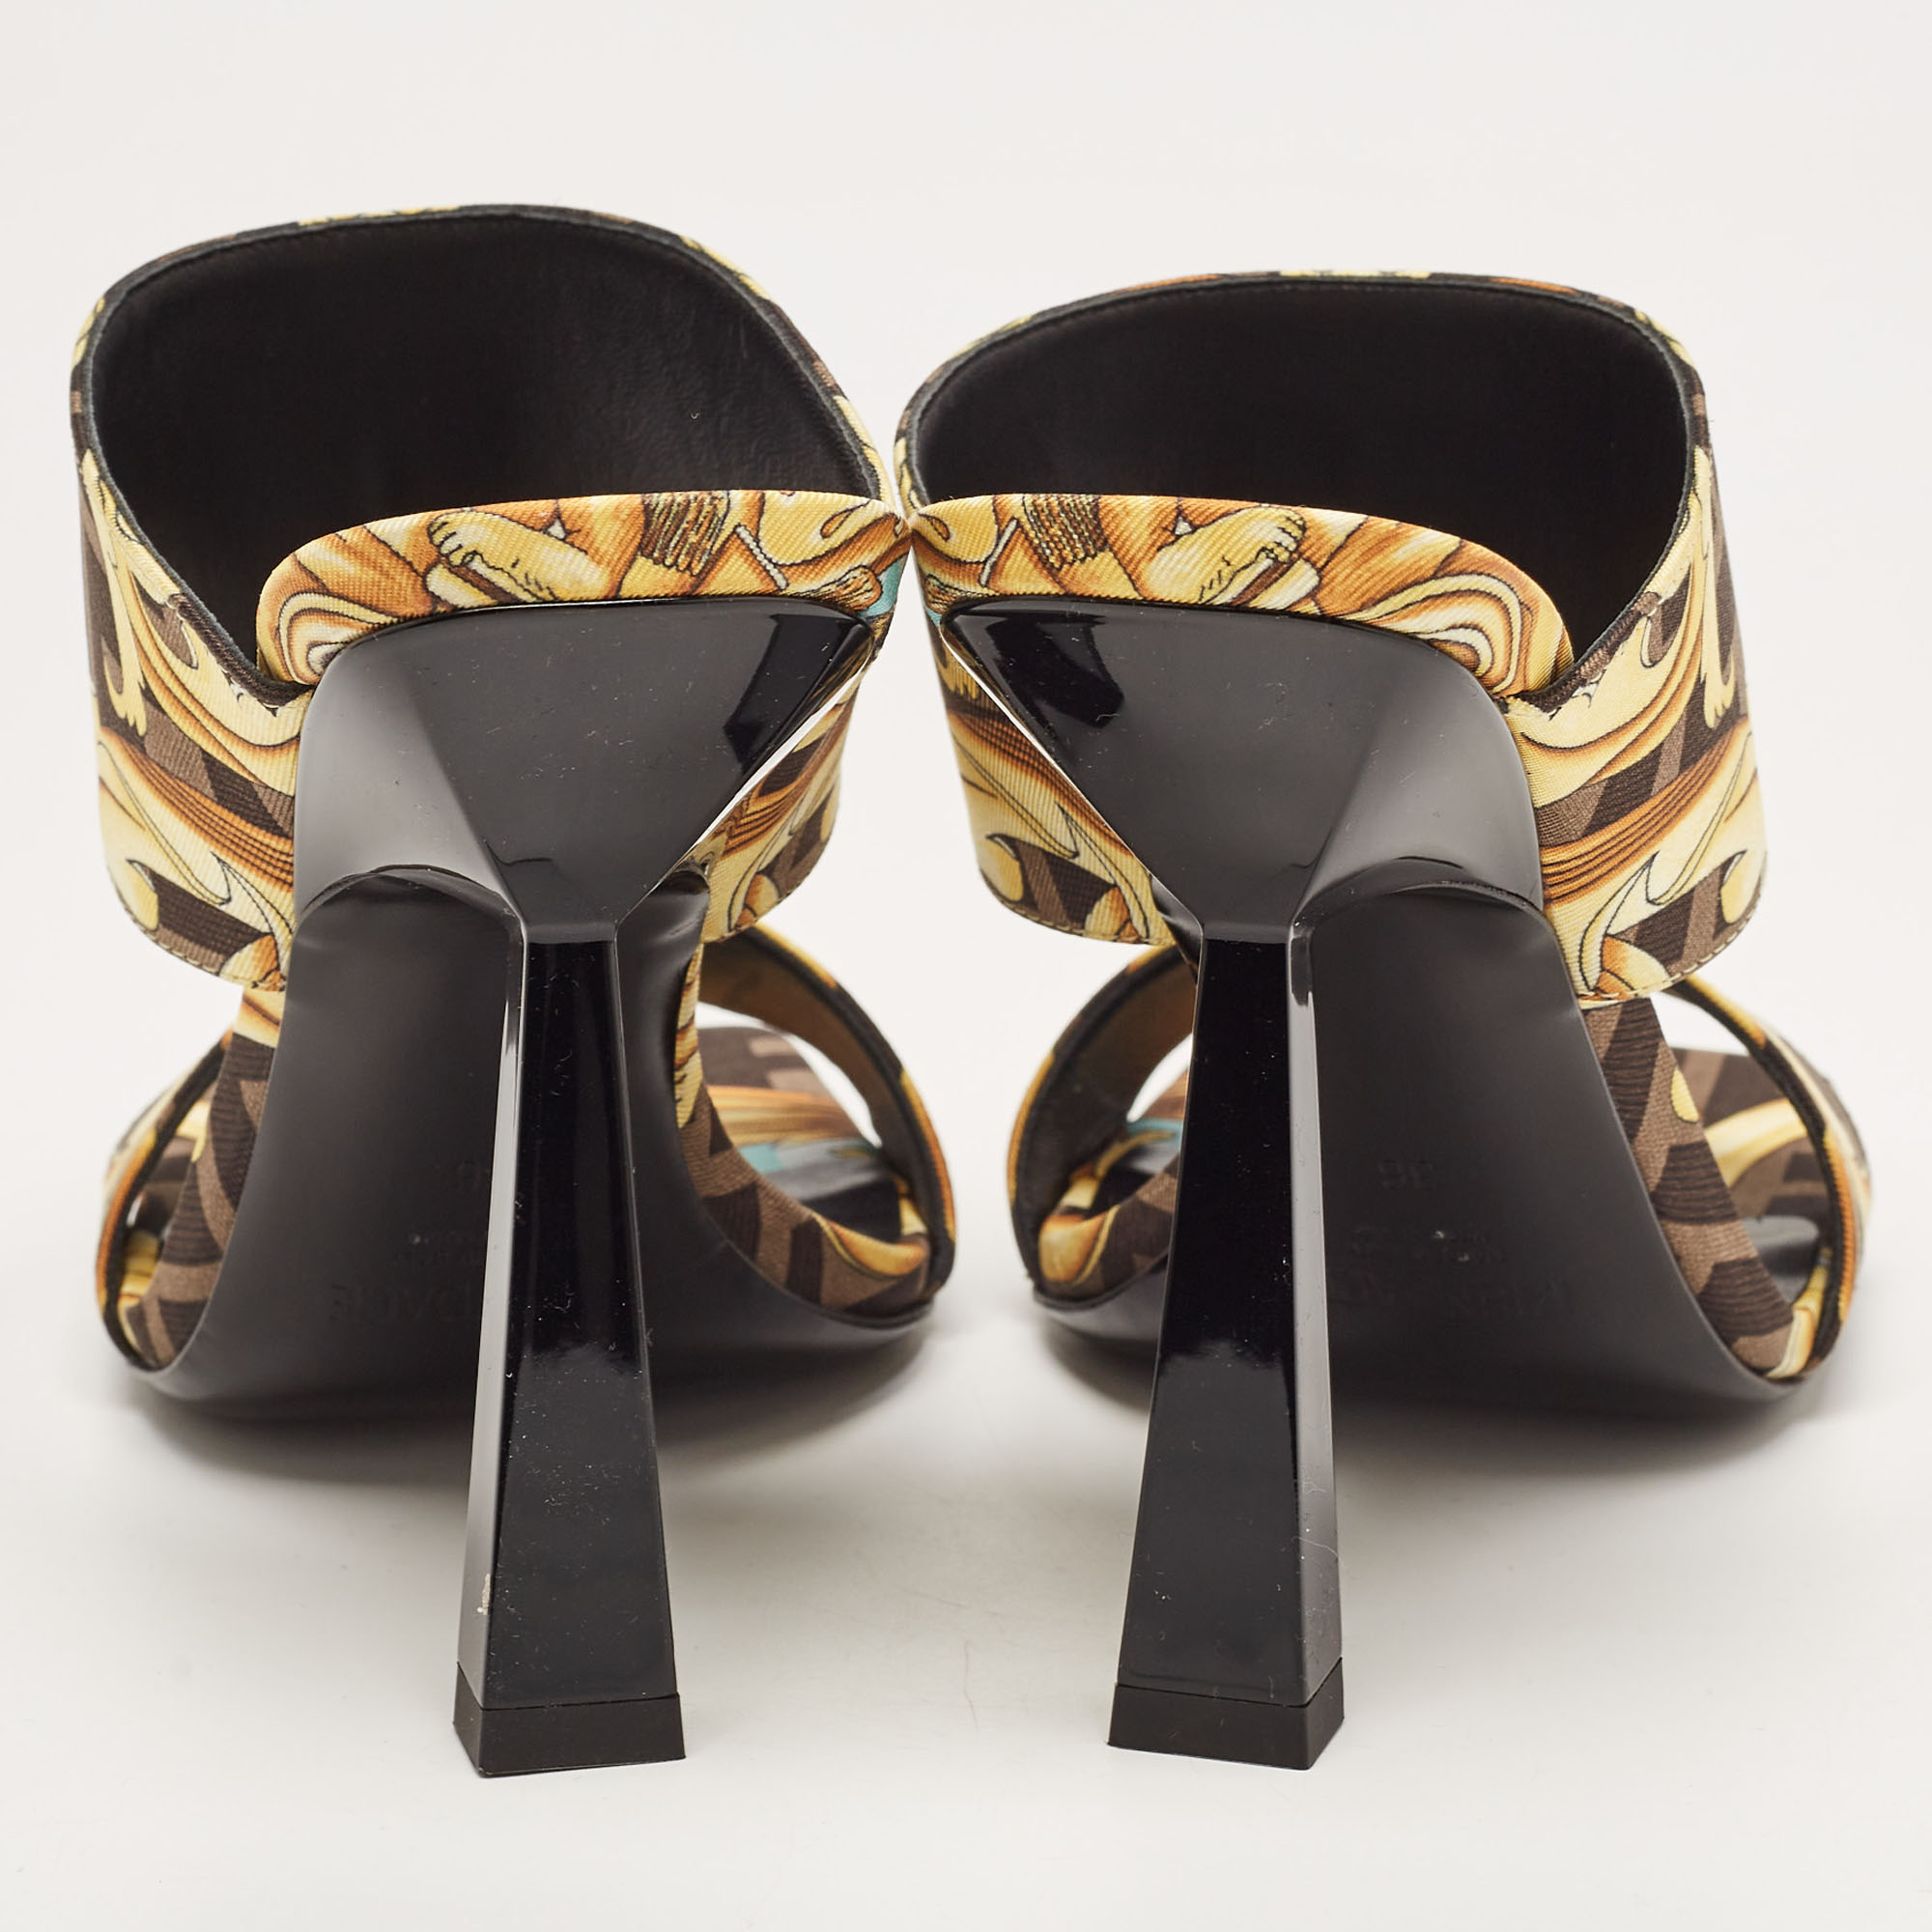 Fendi X Versace Black/Yellow Baroque Fabric Fendace Medusa Slide Sandals Size 36